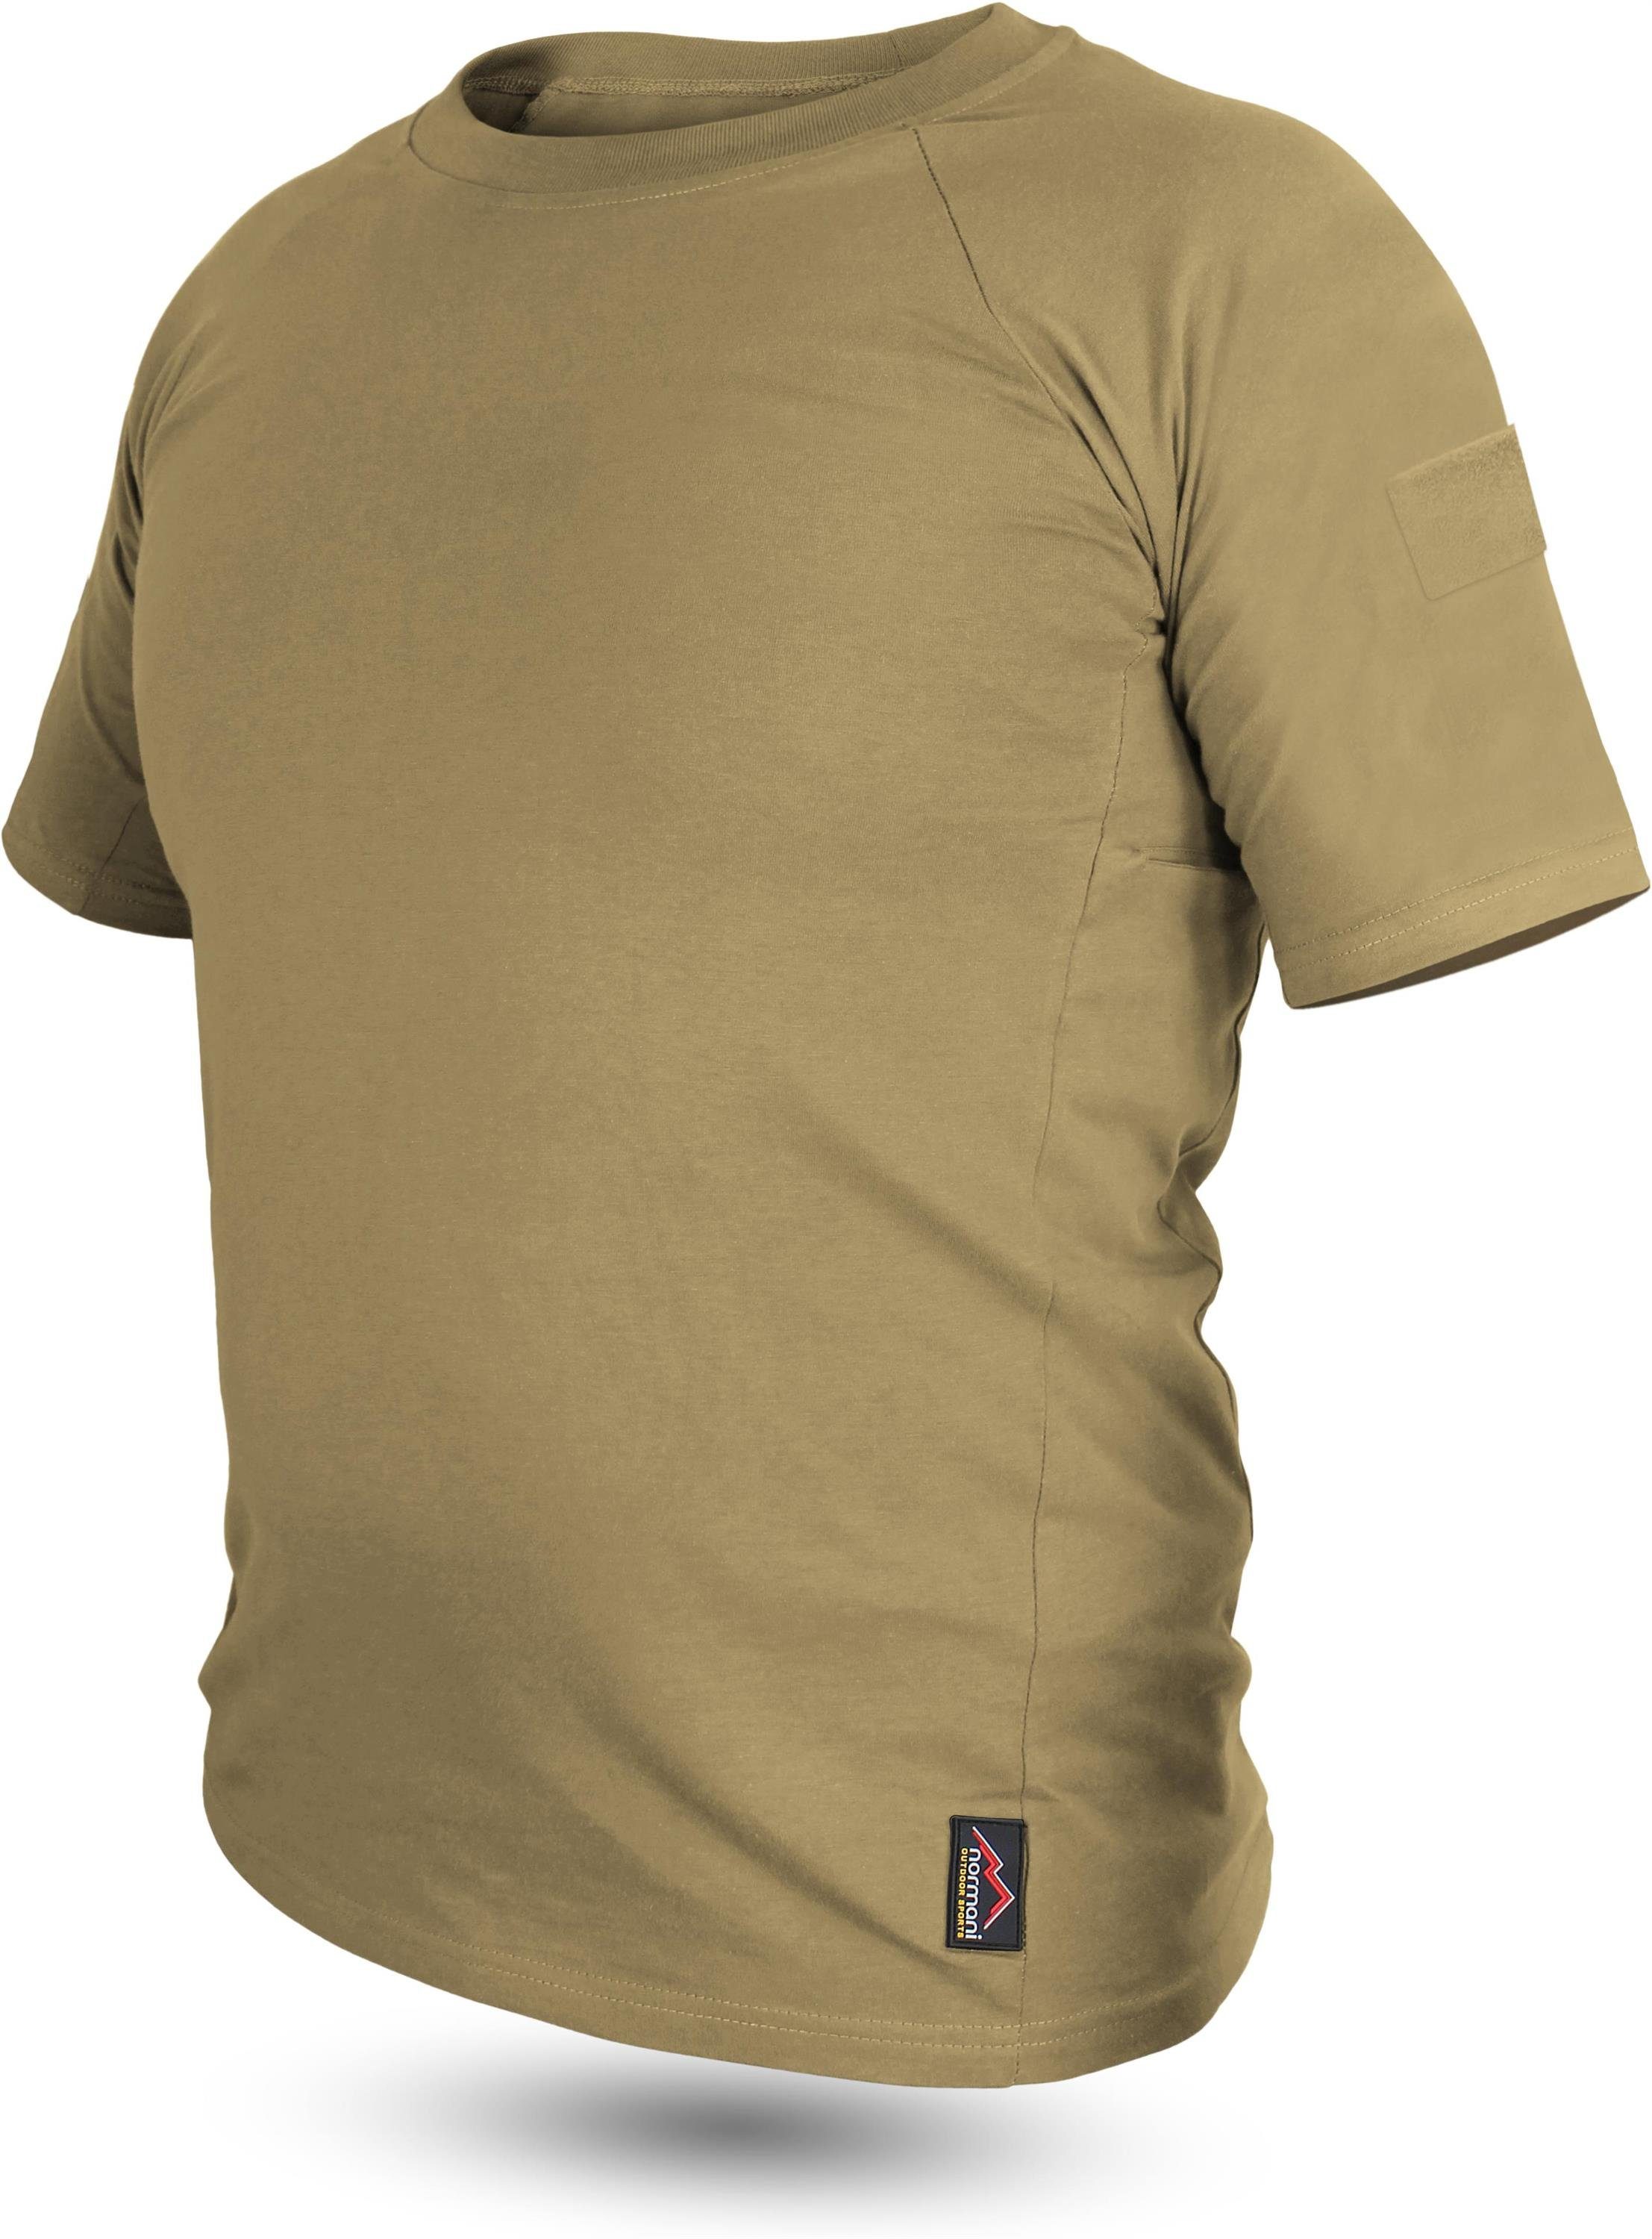 Paintball Herren Shirt Kurzarm T-Shirt Khaki auf den Armen mit Klettflächen Captain Sommer Funktionsshirt Taktisches normani T-Shirt Kampfshirt